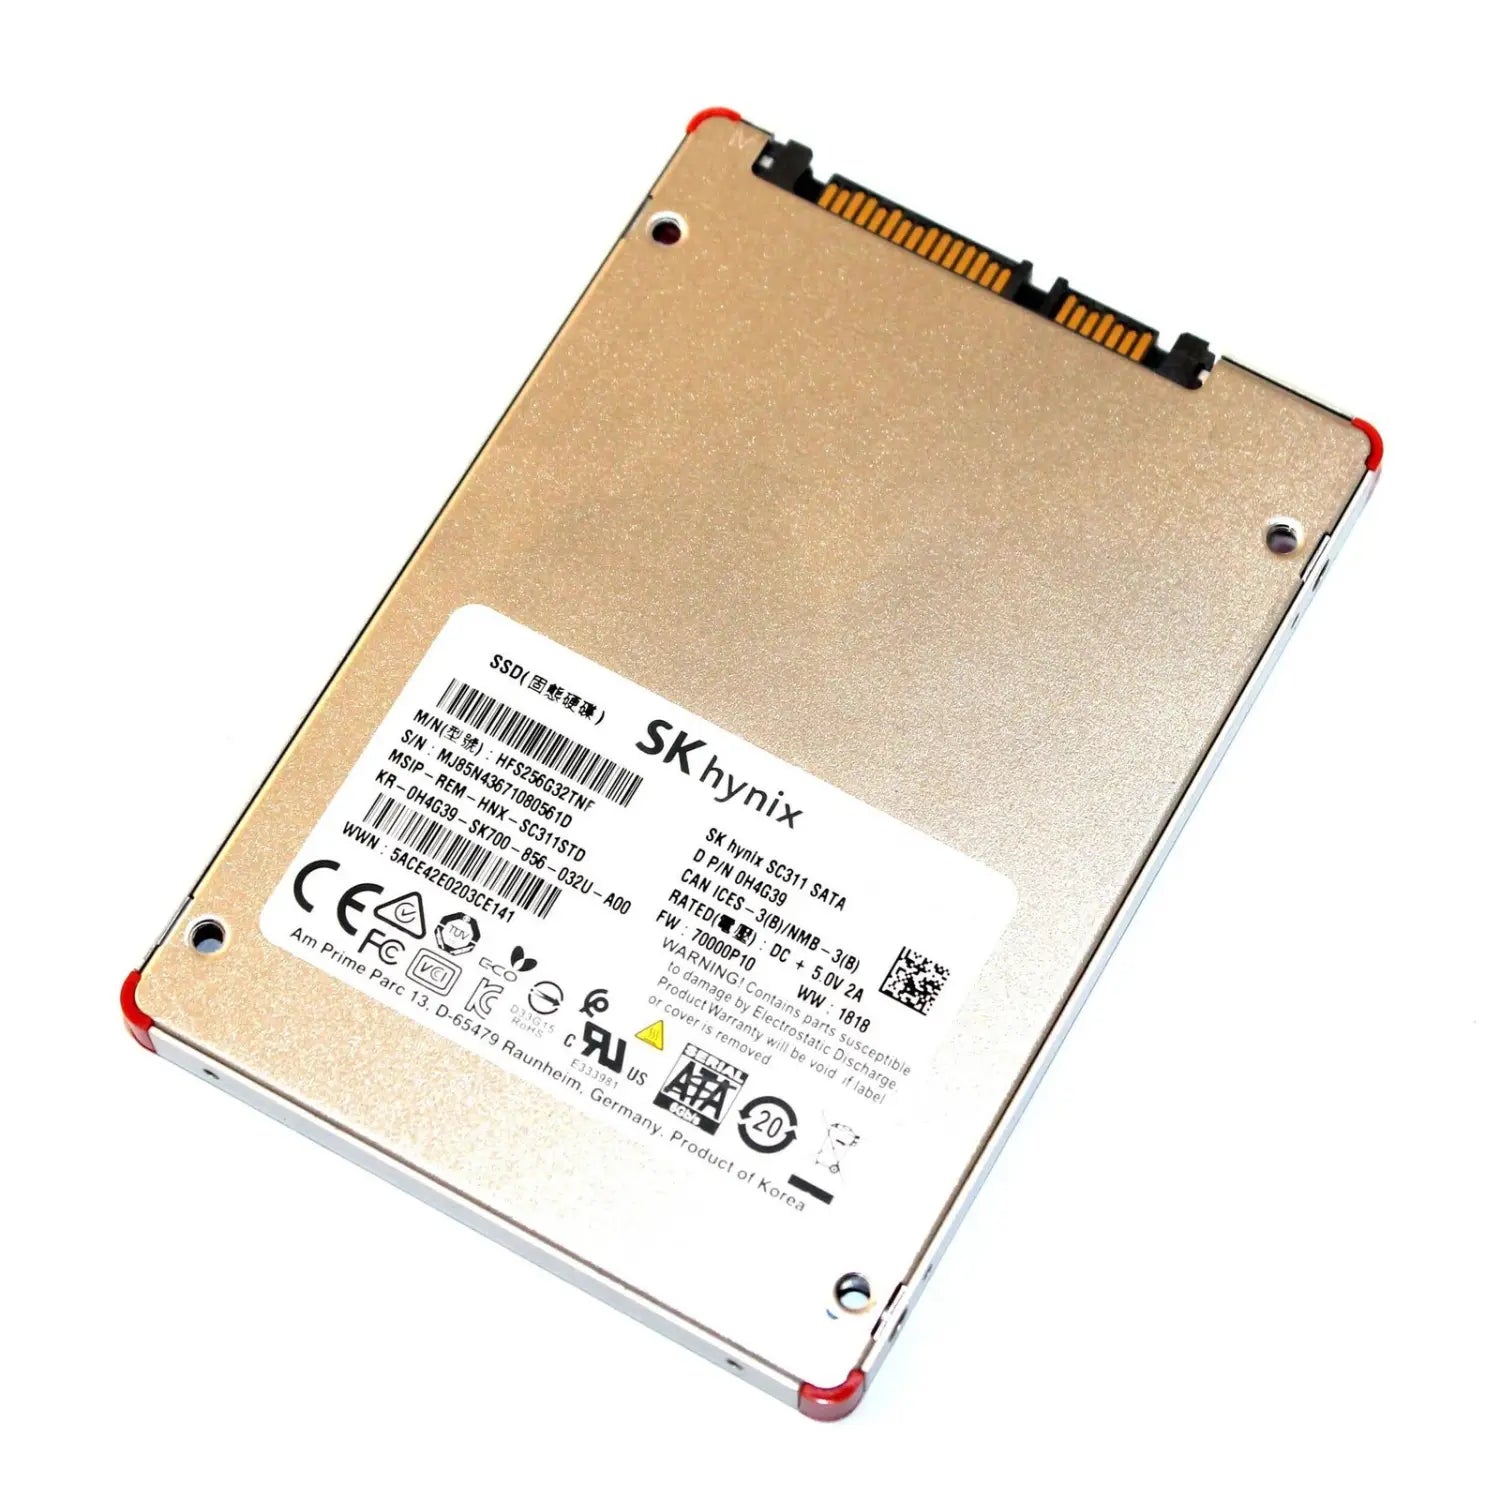 Refurbished High Quality 128GB 2.5-inch SATA SSD Solid